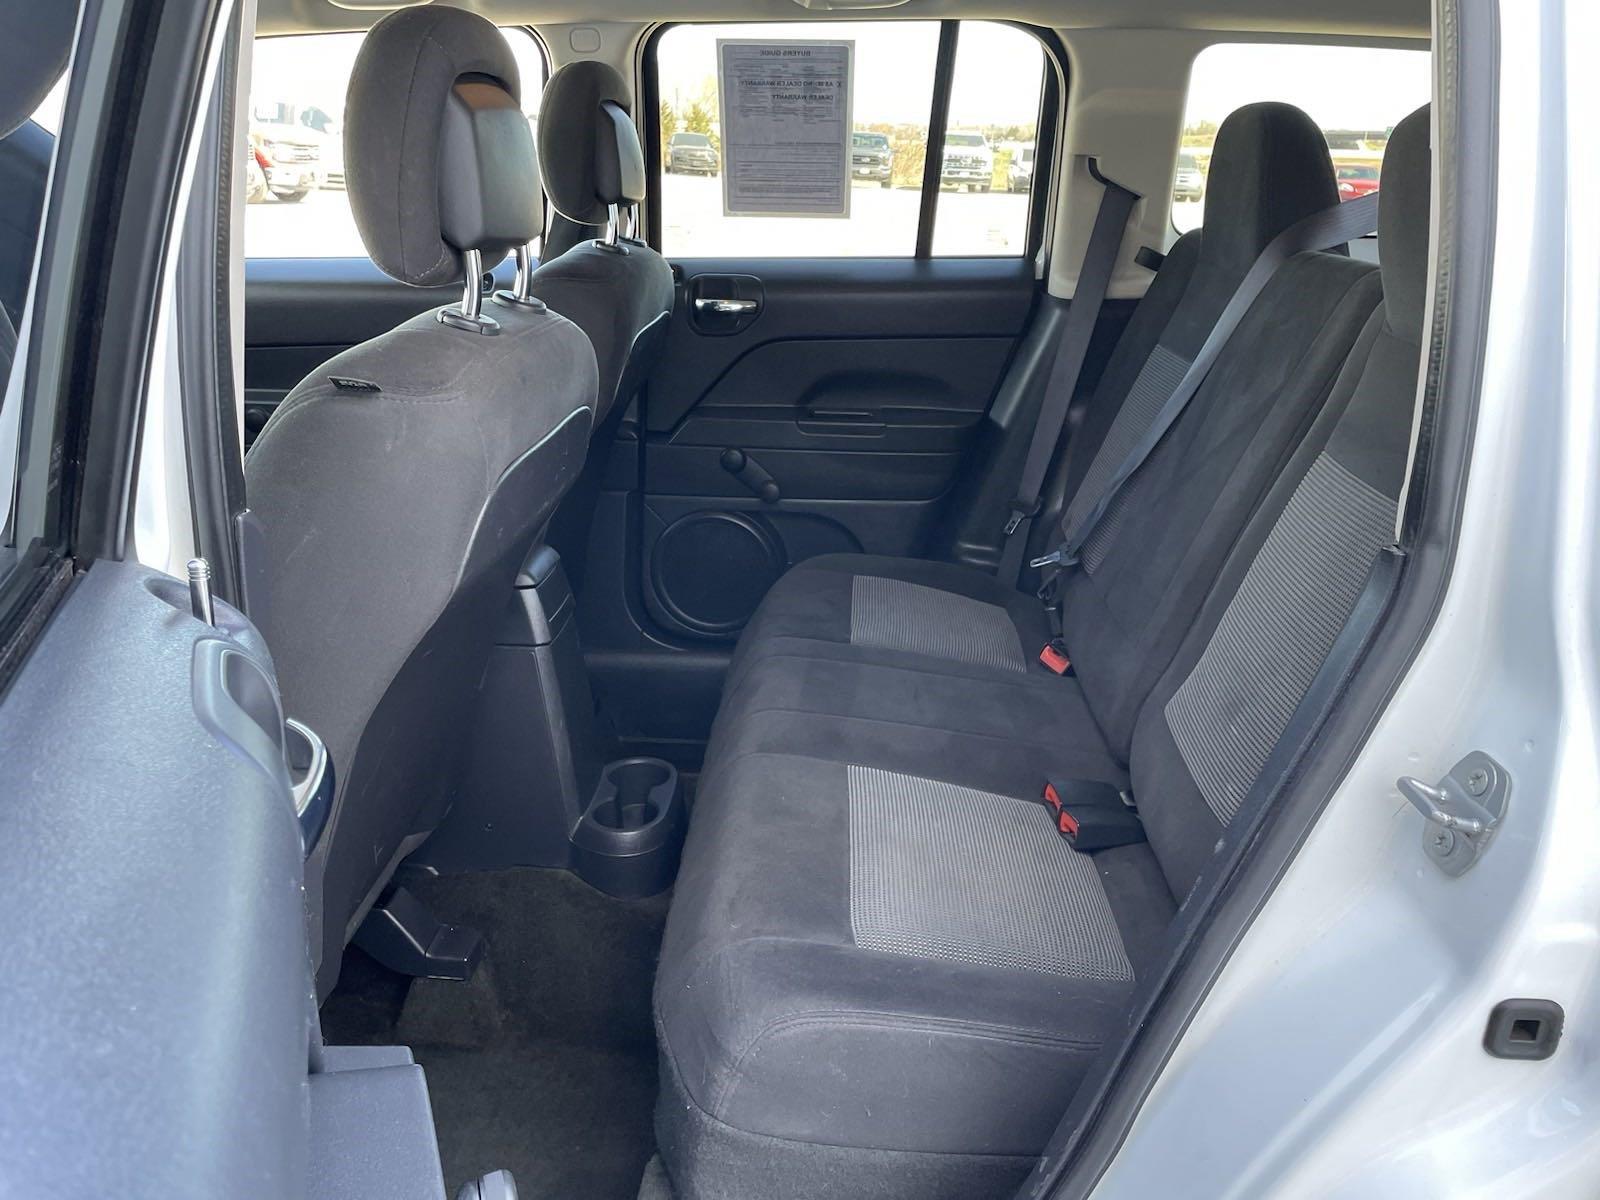 Used 2016 Jeep Patriot Sport SUV for sale in Lincoln NE